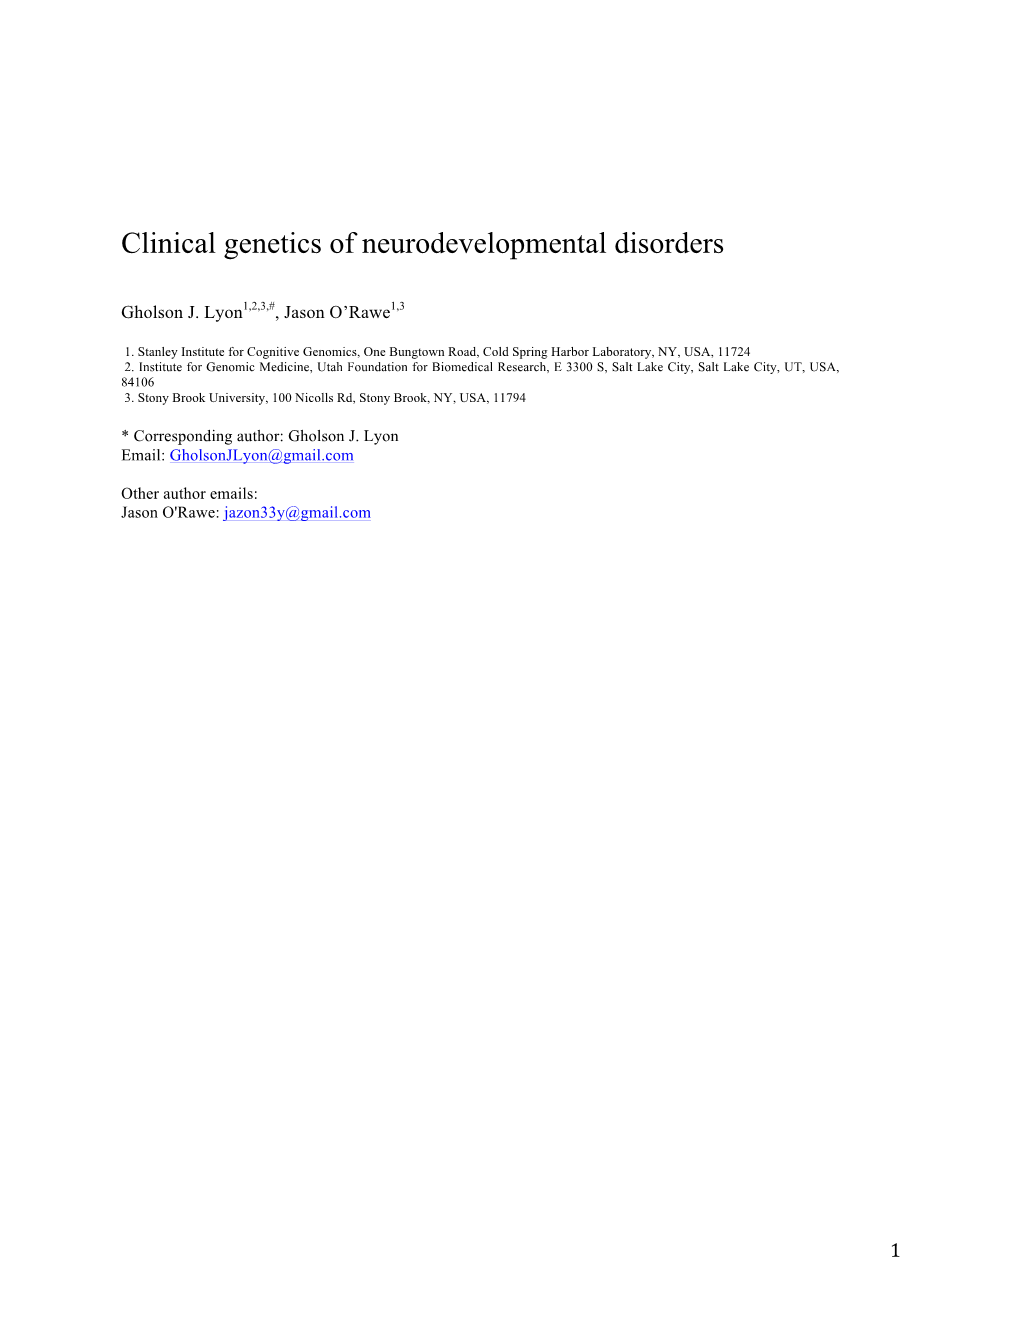 Clinical Genetics of Neurodevelopmental Disorders